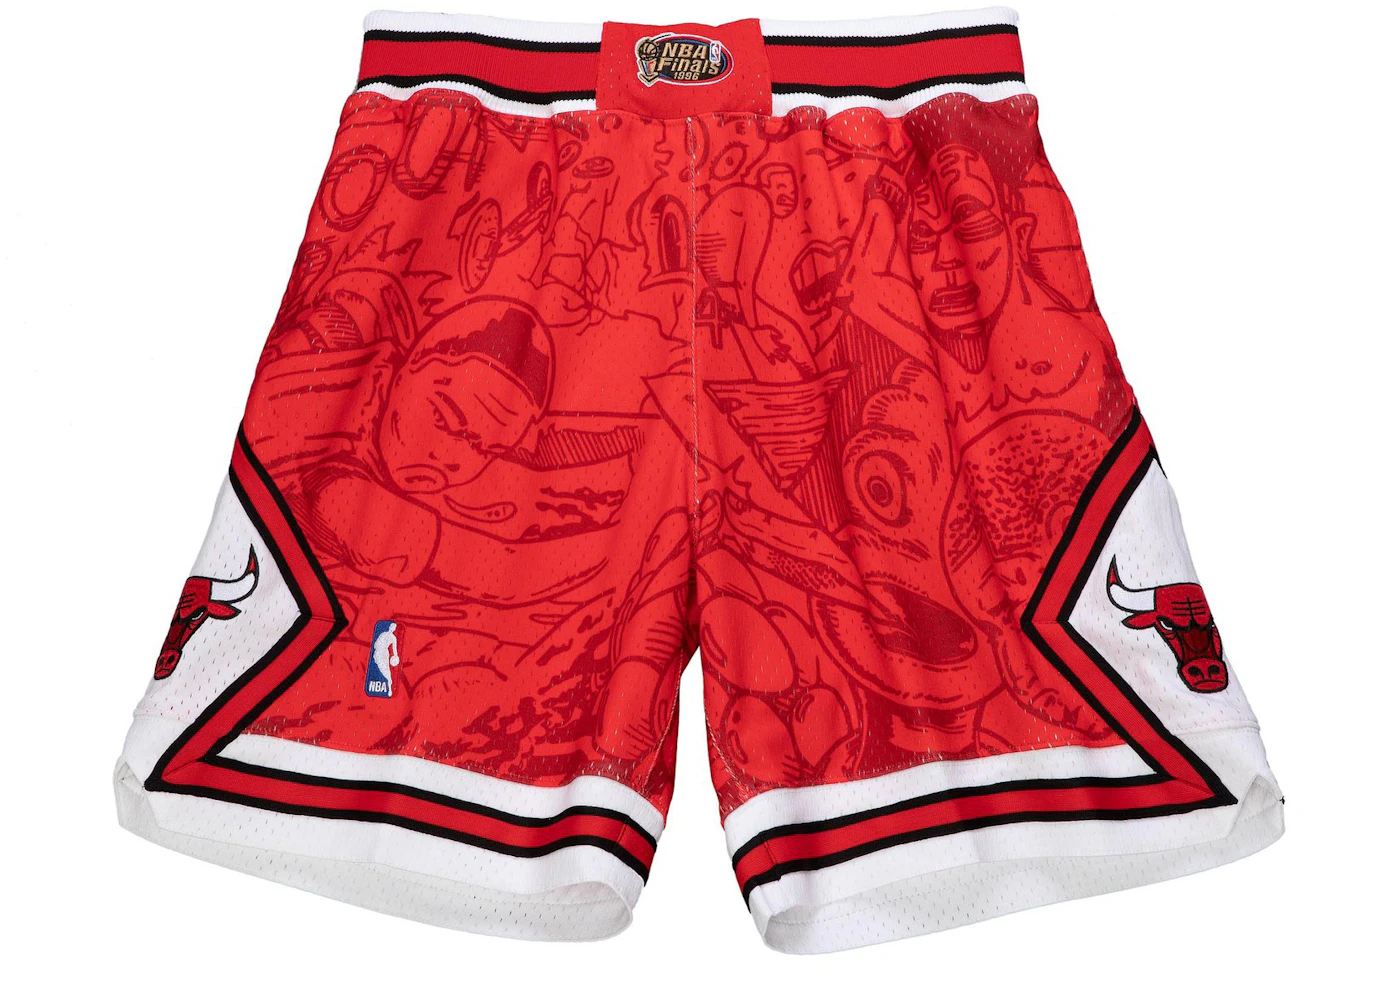 Hebru Brantley x Mitchell & Ness Chicago Bulls Shorts White/Red Men's ...